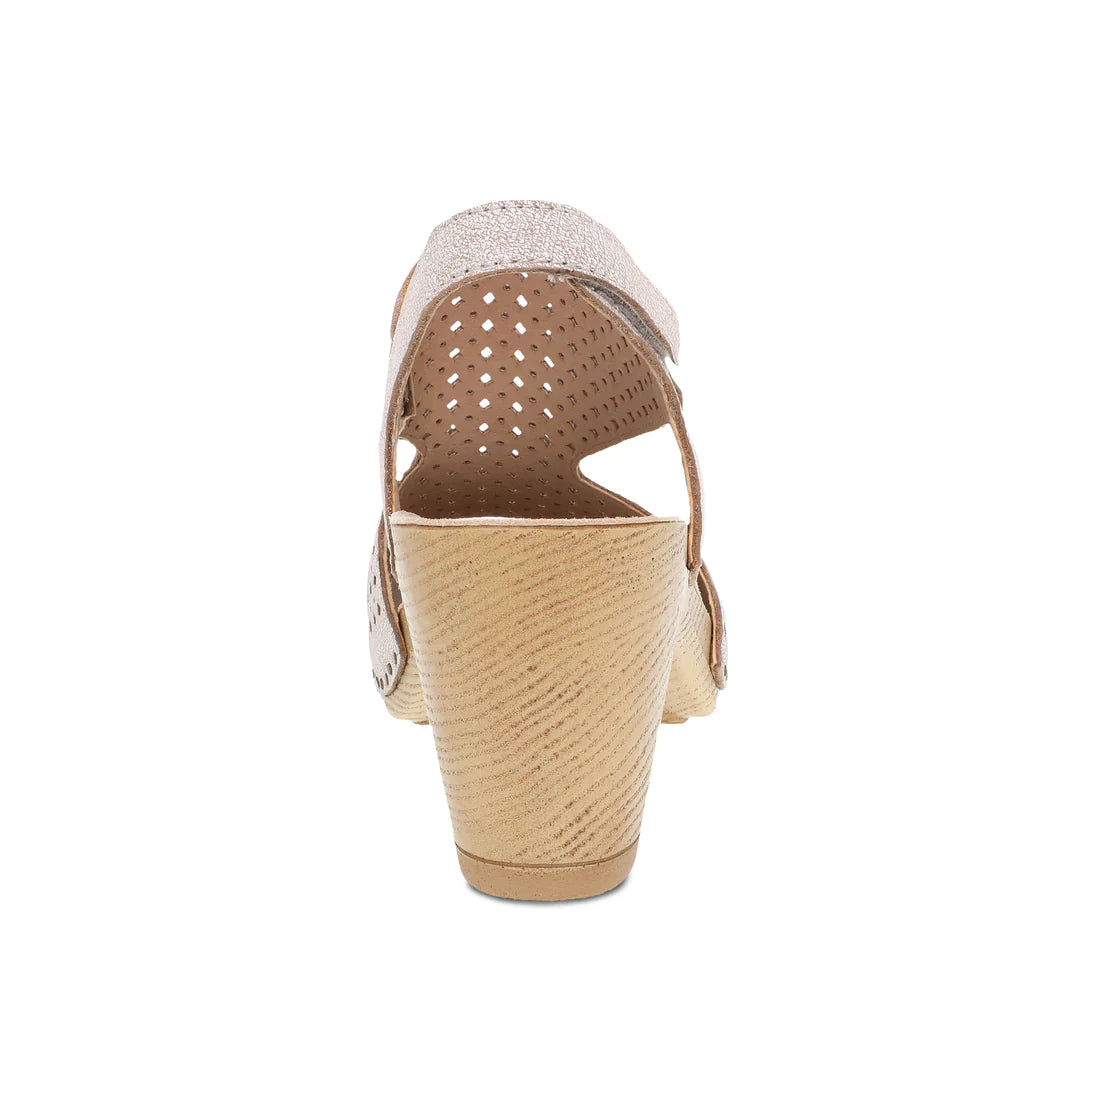 Dansko Women's Teagan Sandal - White Vintage